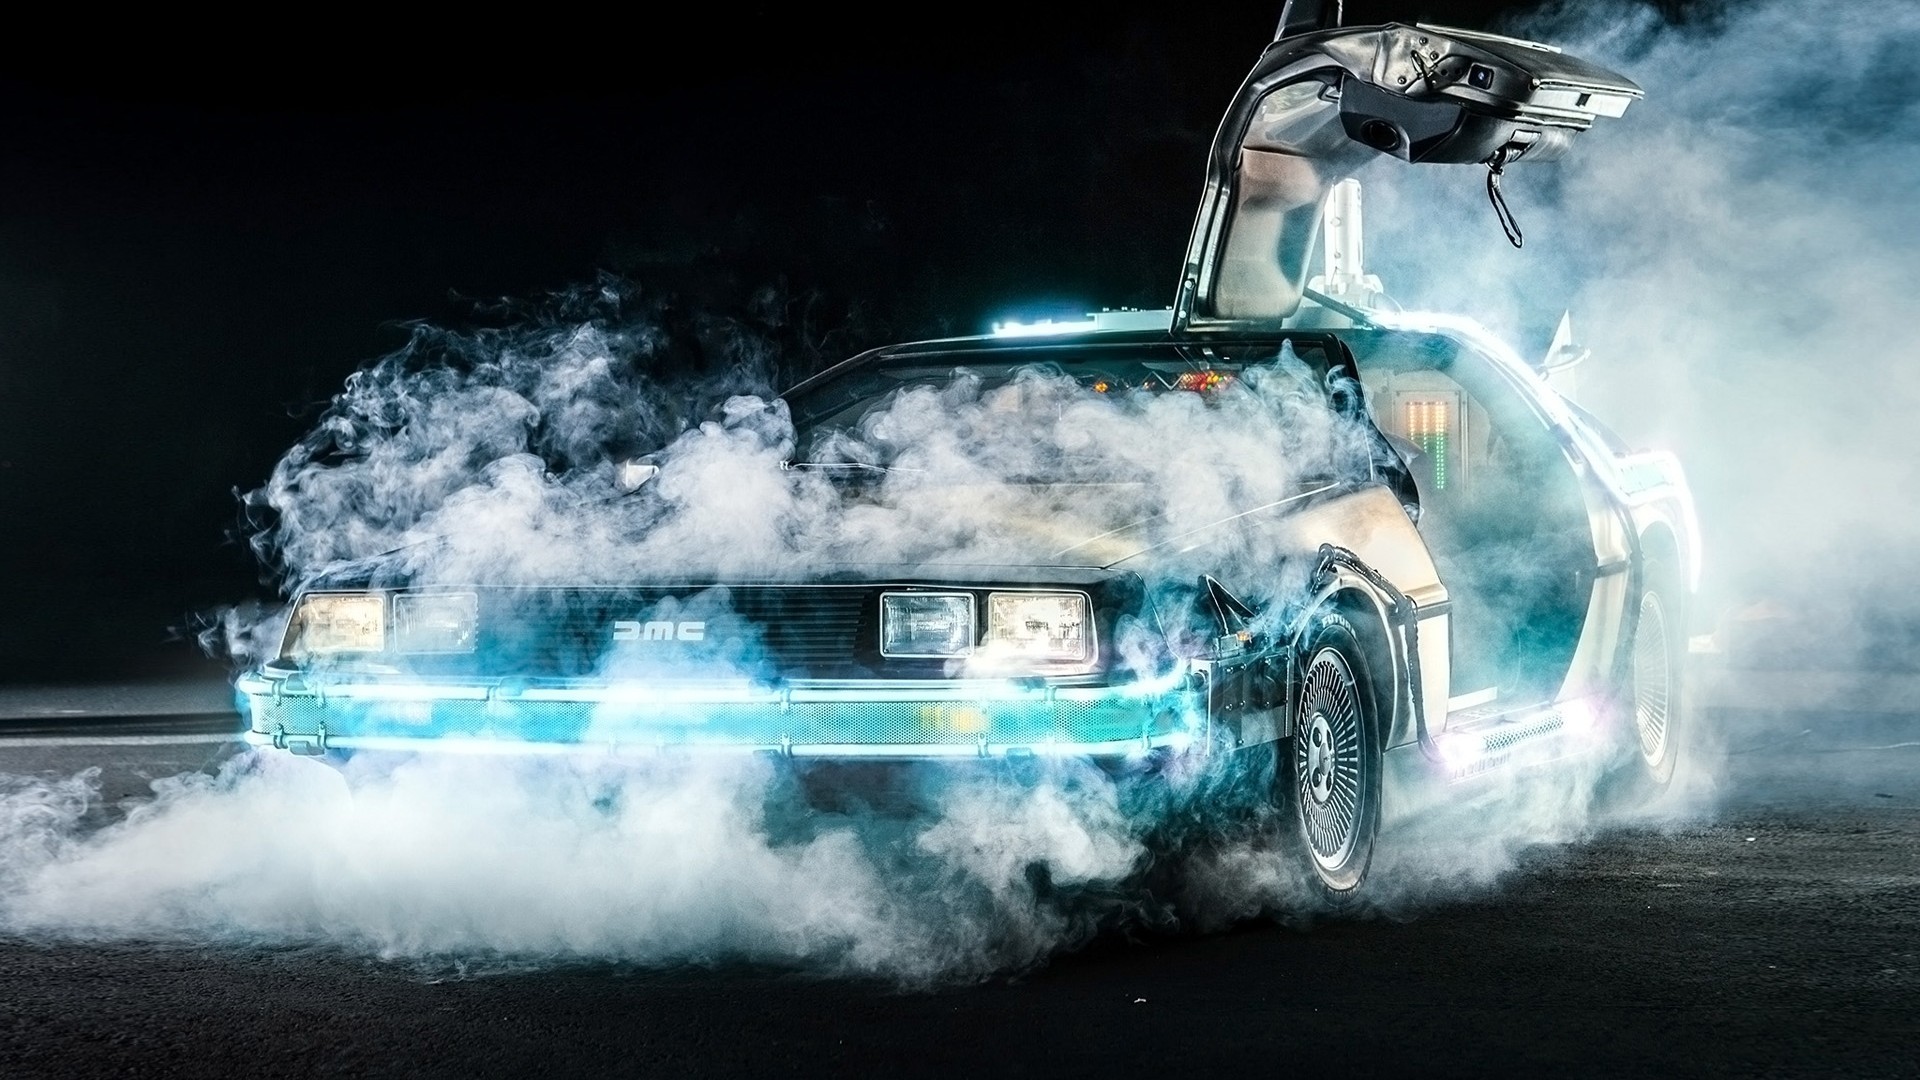 General 1920x1080 Back to the Future DeLorean time travel car movies smoke cyan black night Time Machine vehicle